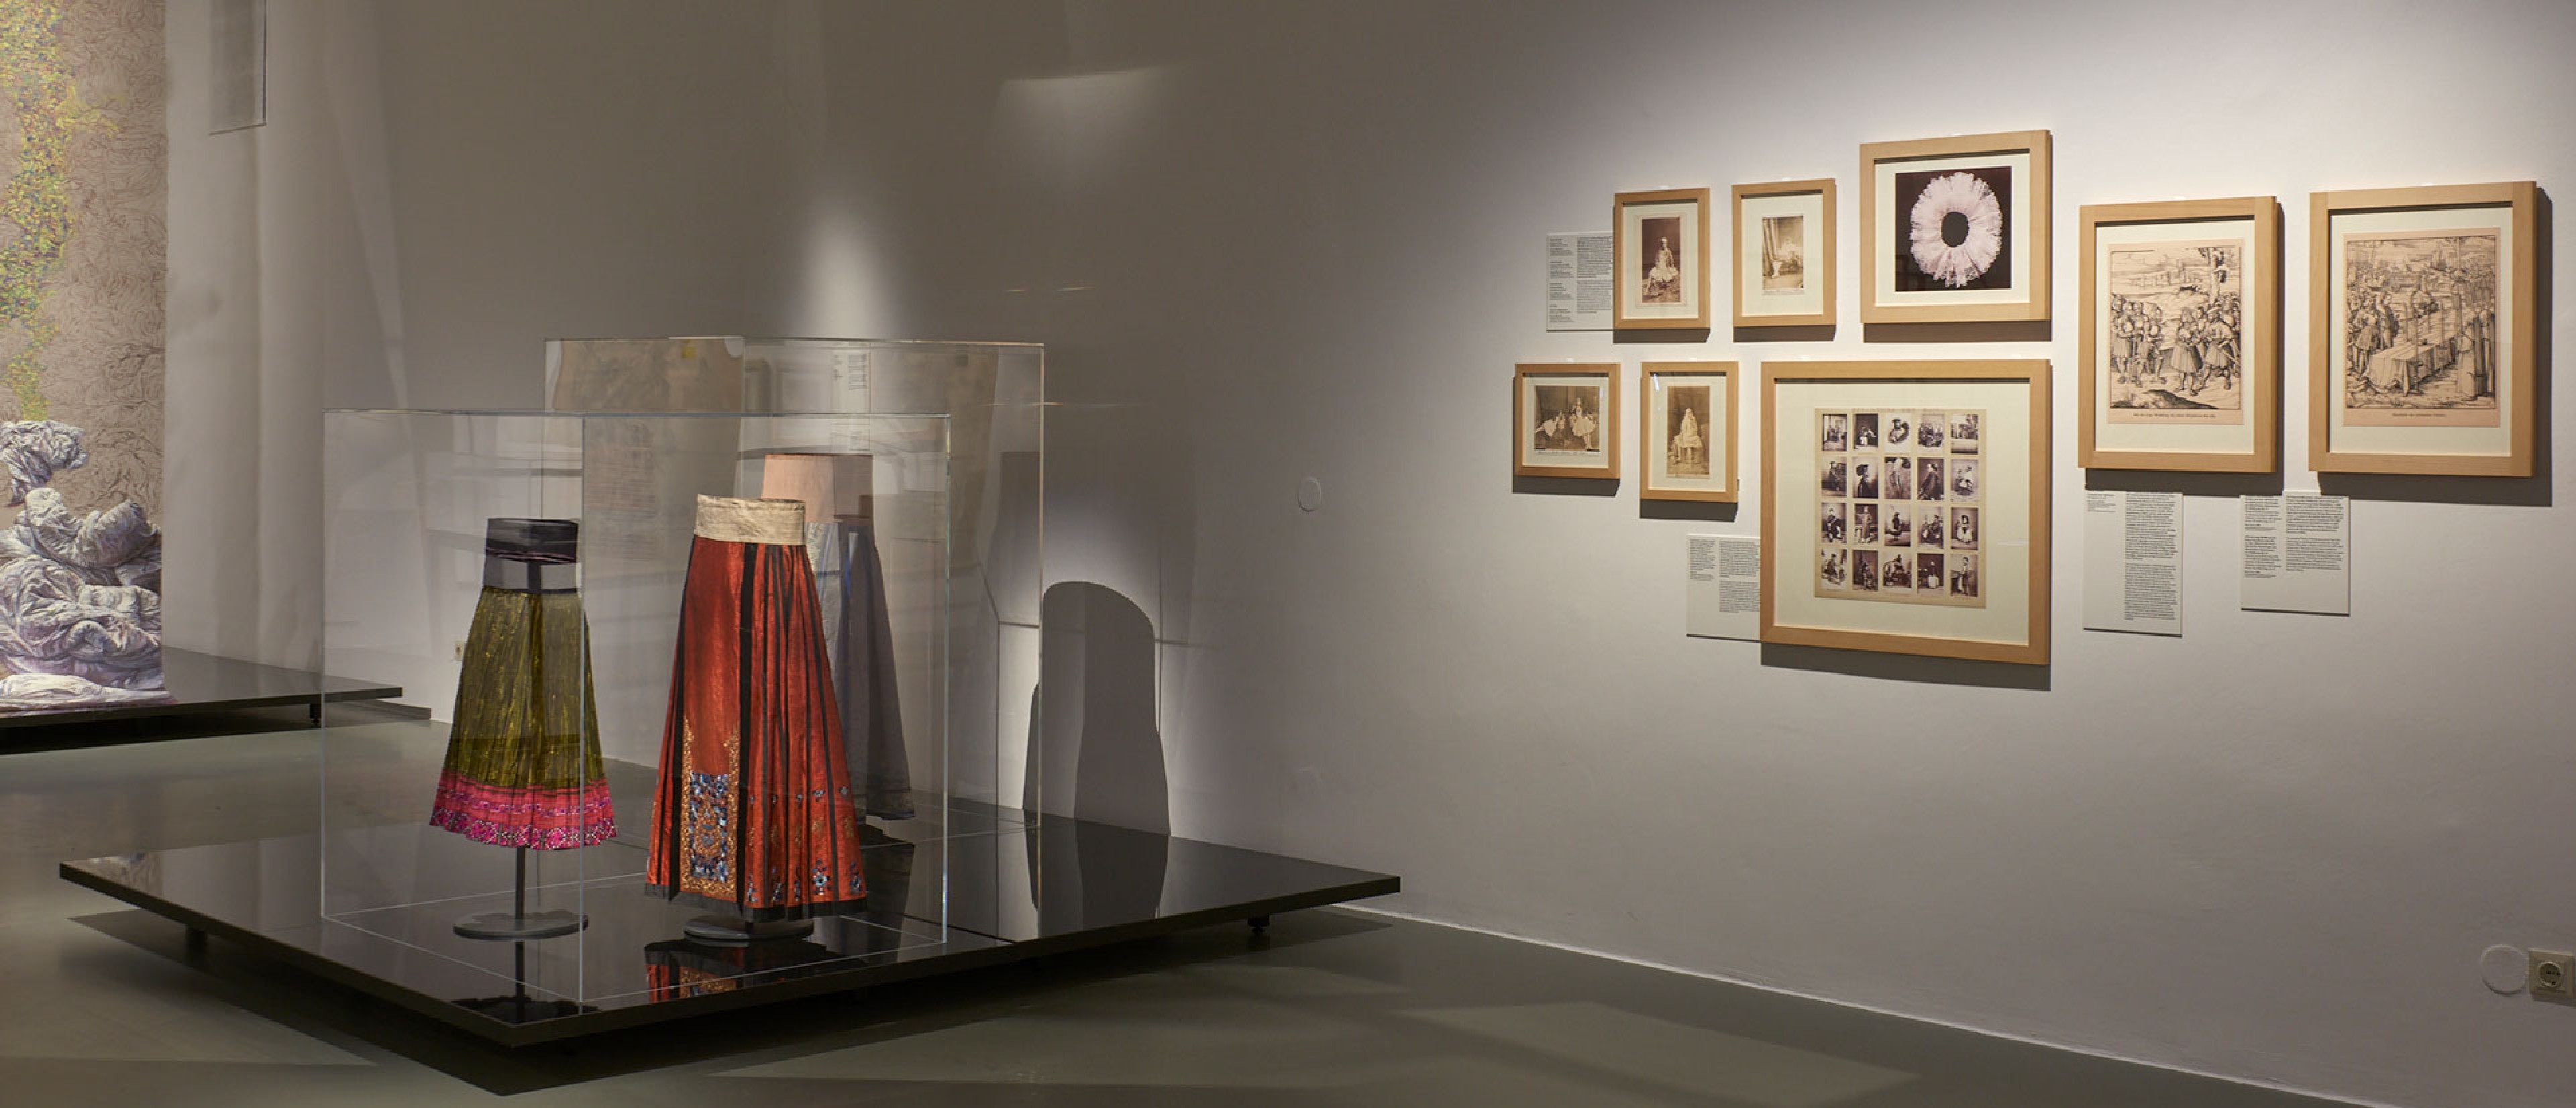 Ausstellungsraum mit Objekten: Faltenröcke, Malerei, Fotografien an den Wänden.